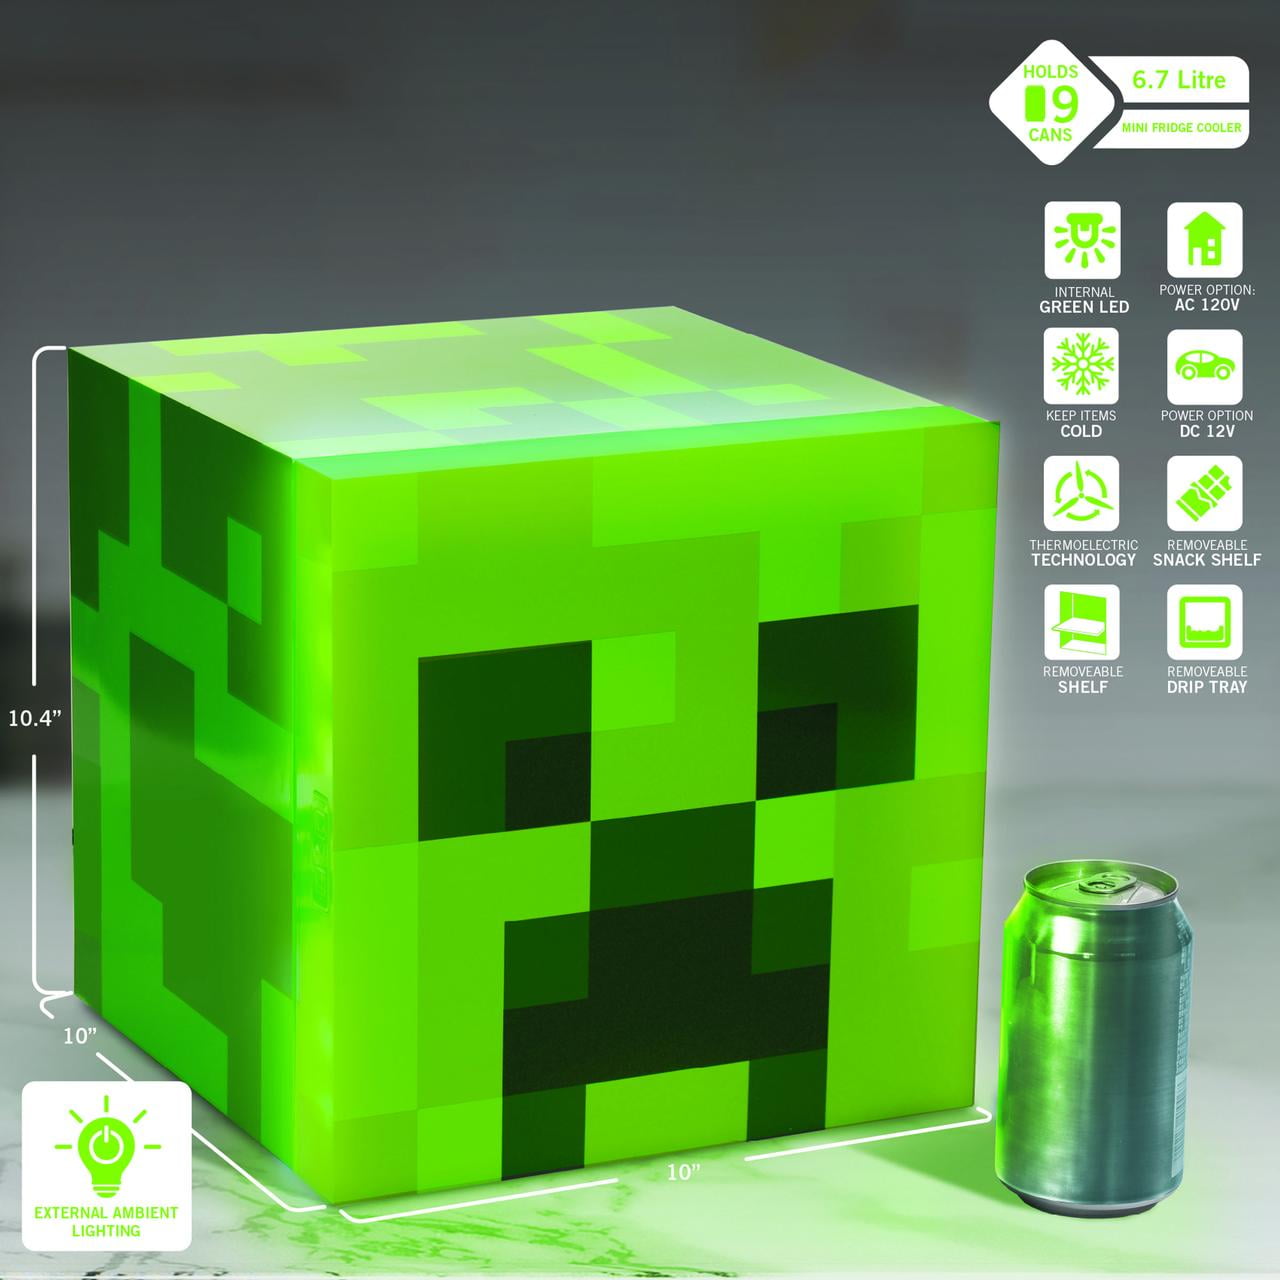 Minecraft 17923 Green Creeper 9 Can Mini Fridge 6.7L 1 Door Ambient Lighting 10.4 in H 10 in W 10 in D